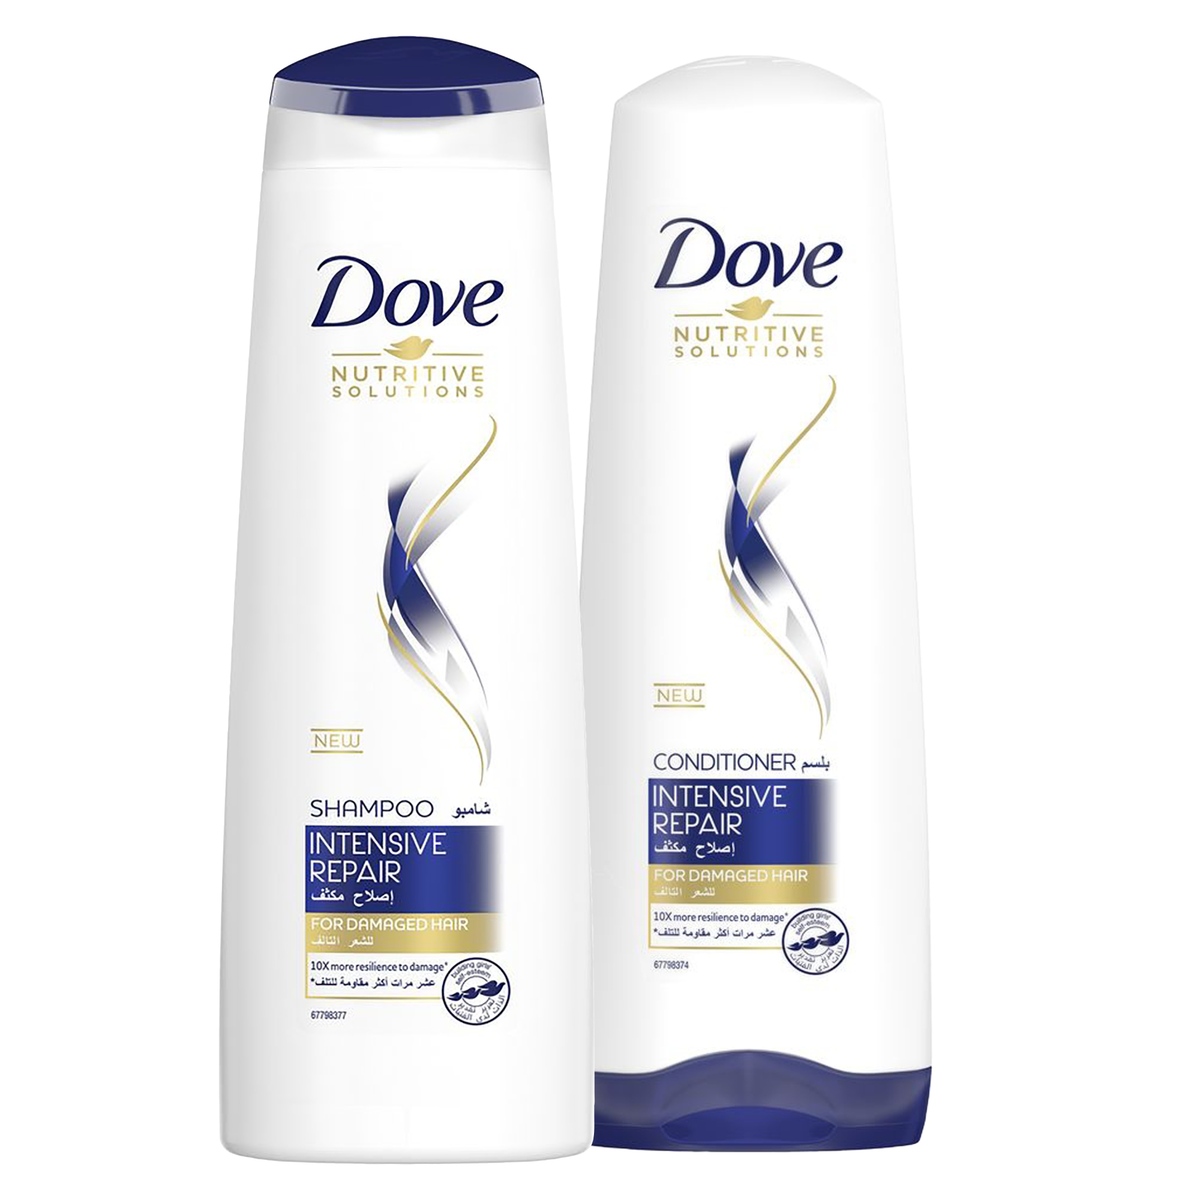 Dove Nutritive Solutions Intensive Rescue Conditioner Value Pack 350 ml + Shampoo 400 ml